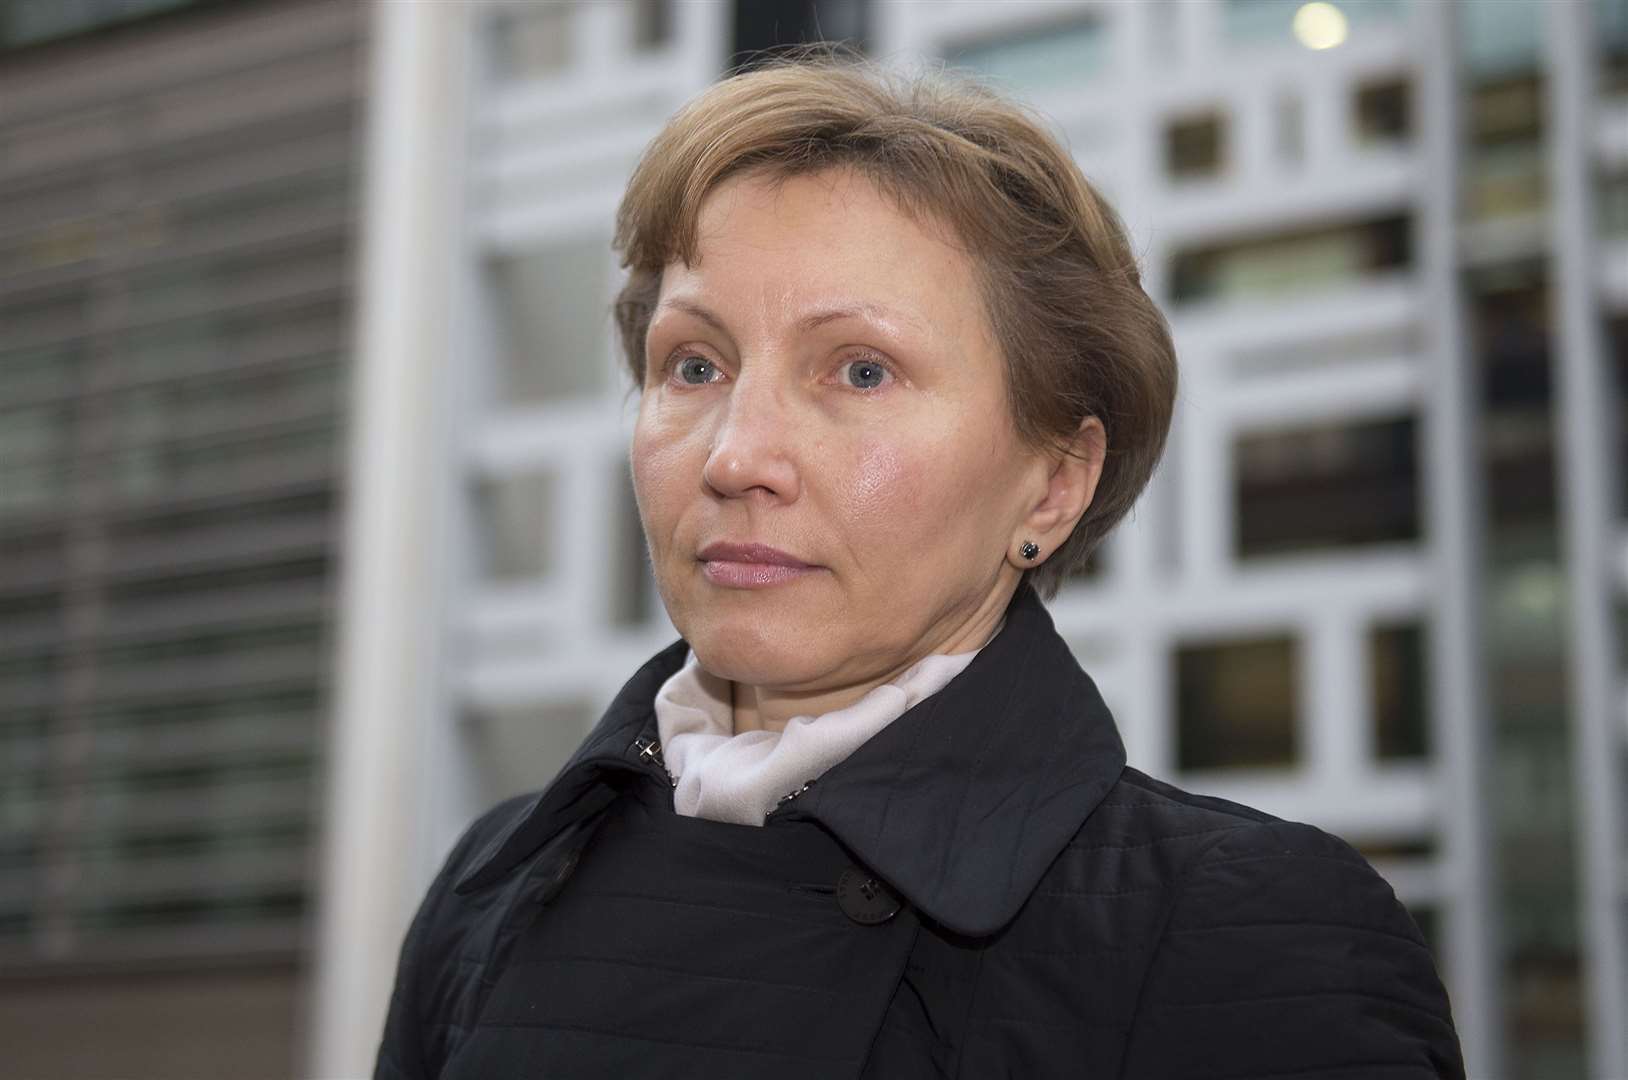 Marina Litvinenko, the wife of former Russian spy Alexander Litvinenko, took her case to the European Court of Human Rights. (Anthony Devlin/PA)